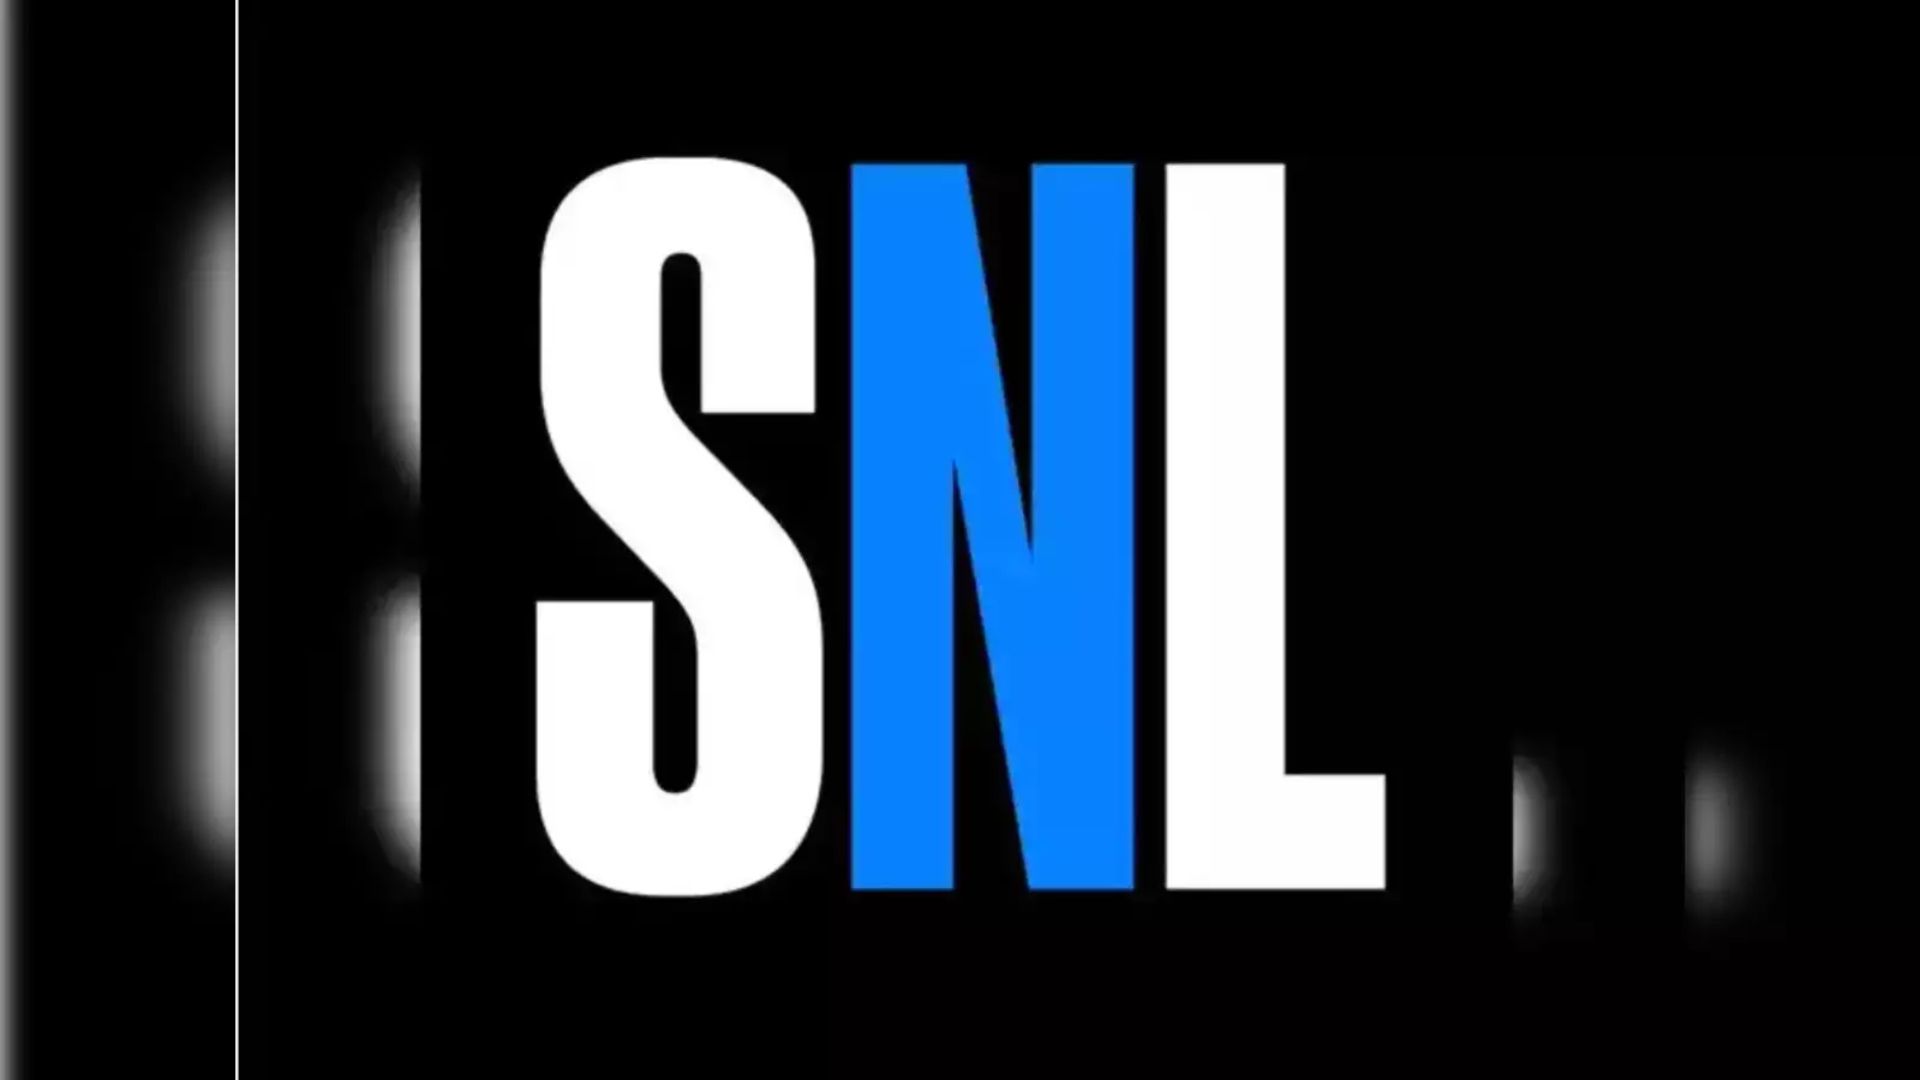 SNL logo for Saturday Night Live